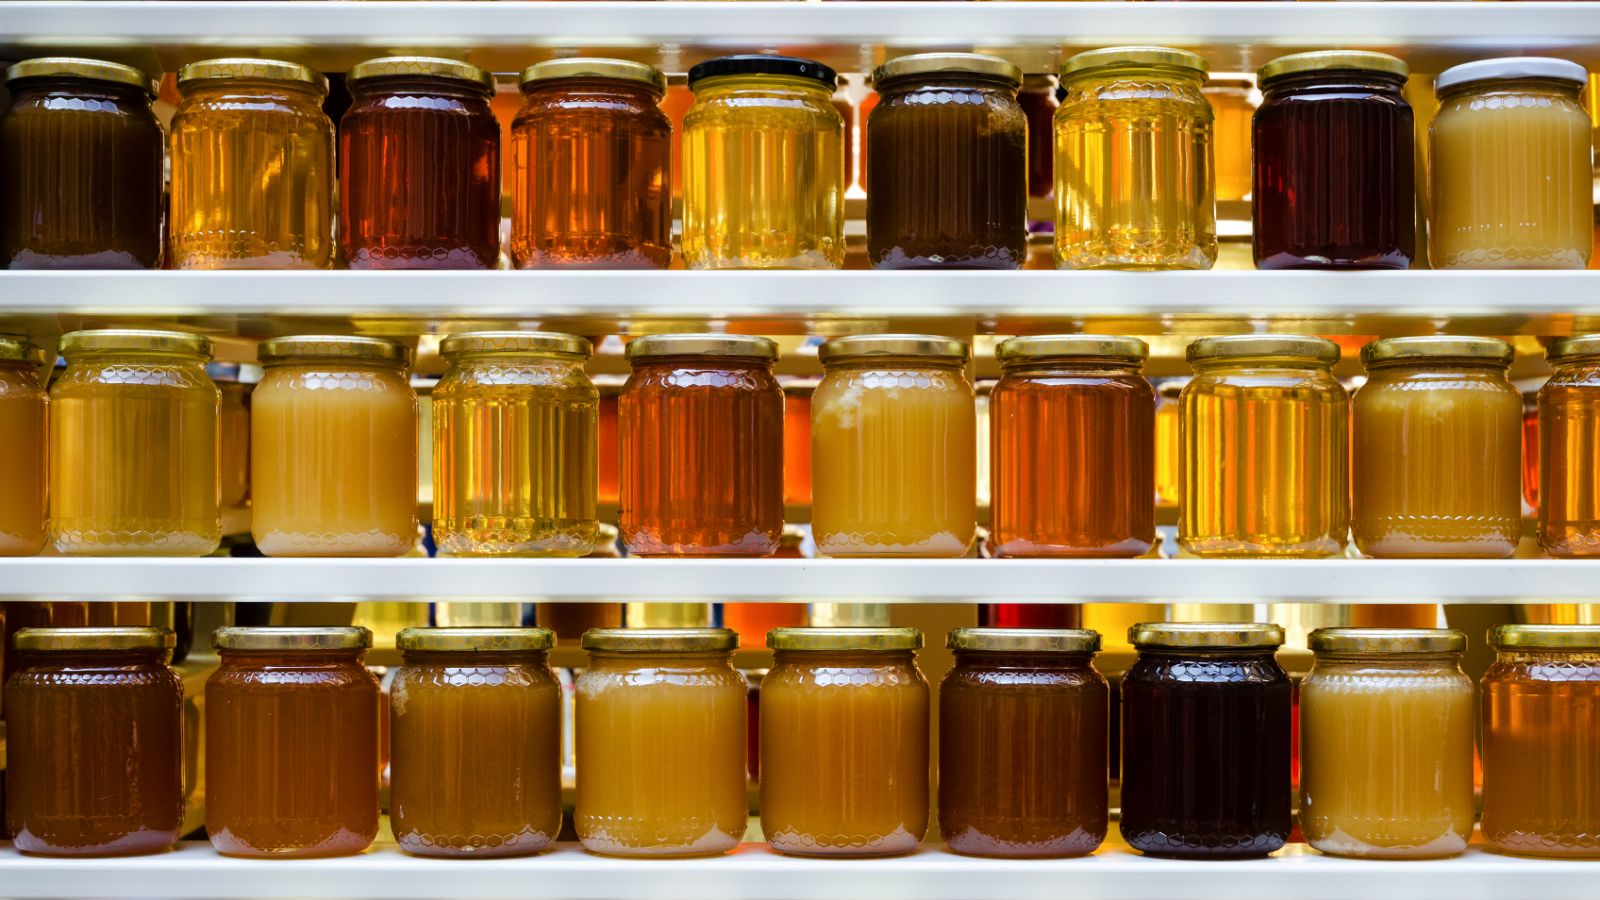 Diferencias entre tipos de miel: eucalipto, romero, acacia y tomillo